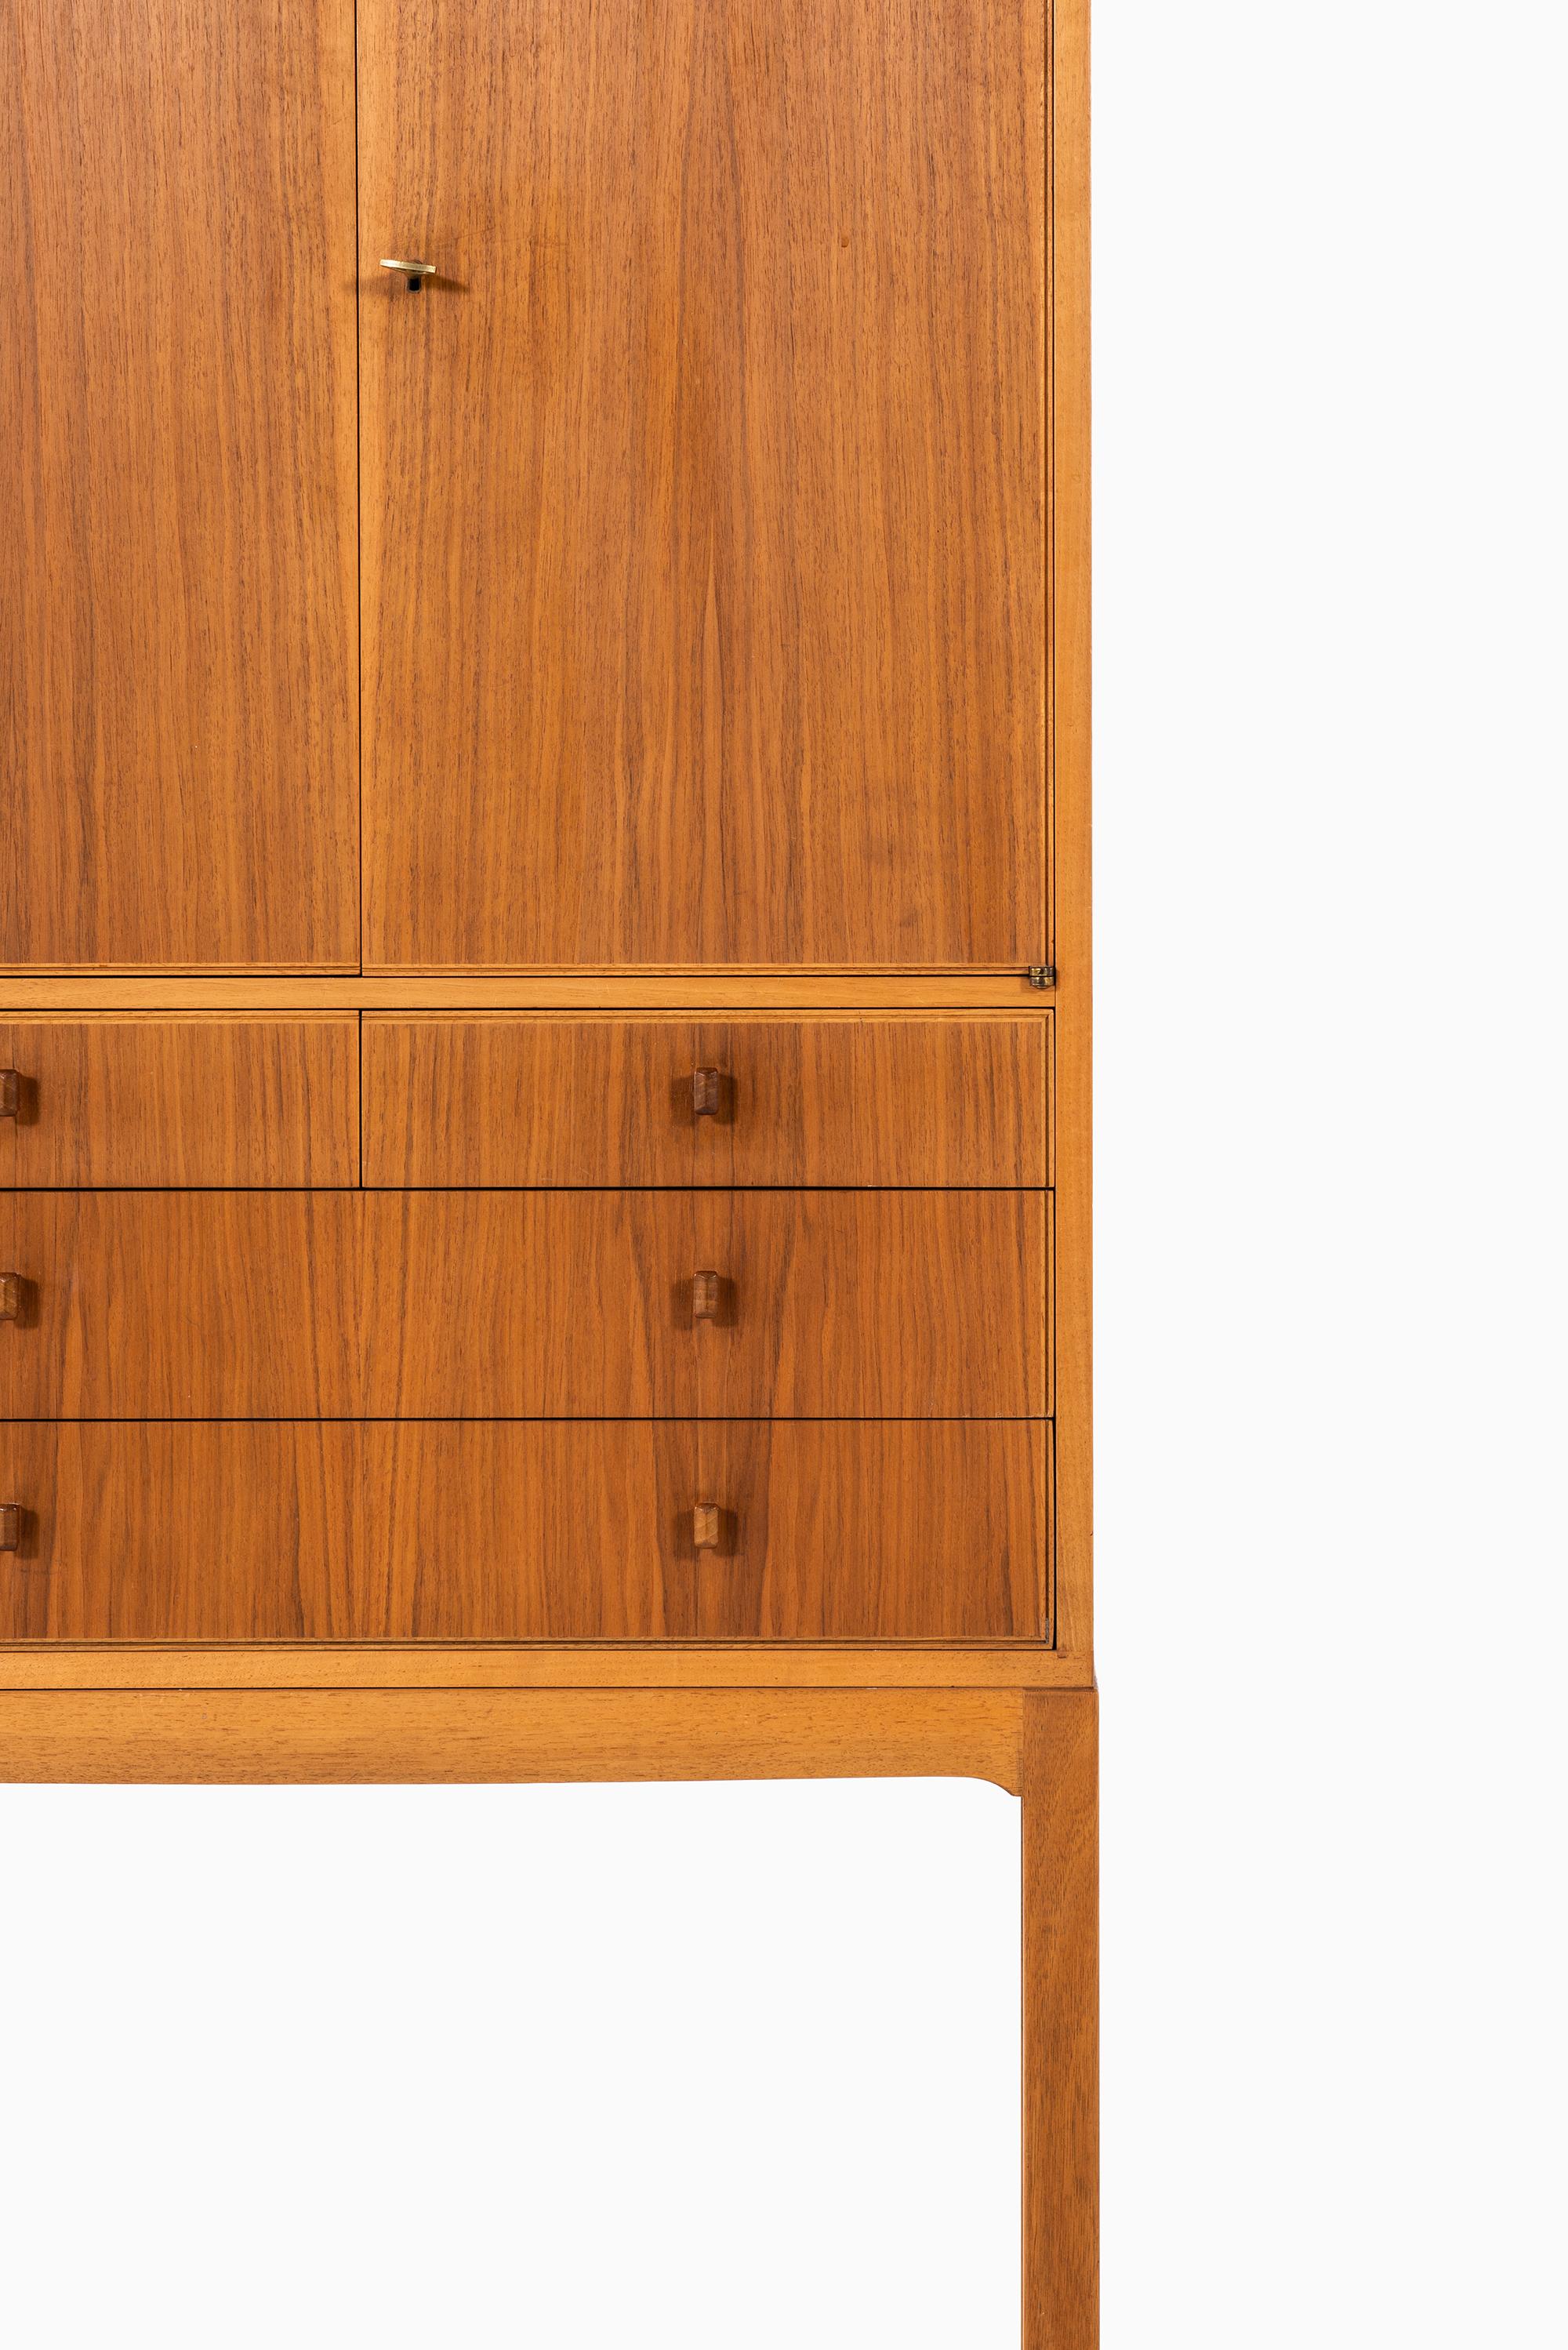 Rare cabinet model Lillbo designed by Carl Malmsten. Produced by Carl Löfving & Söner in Sweden.